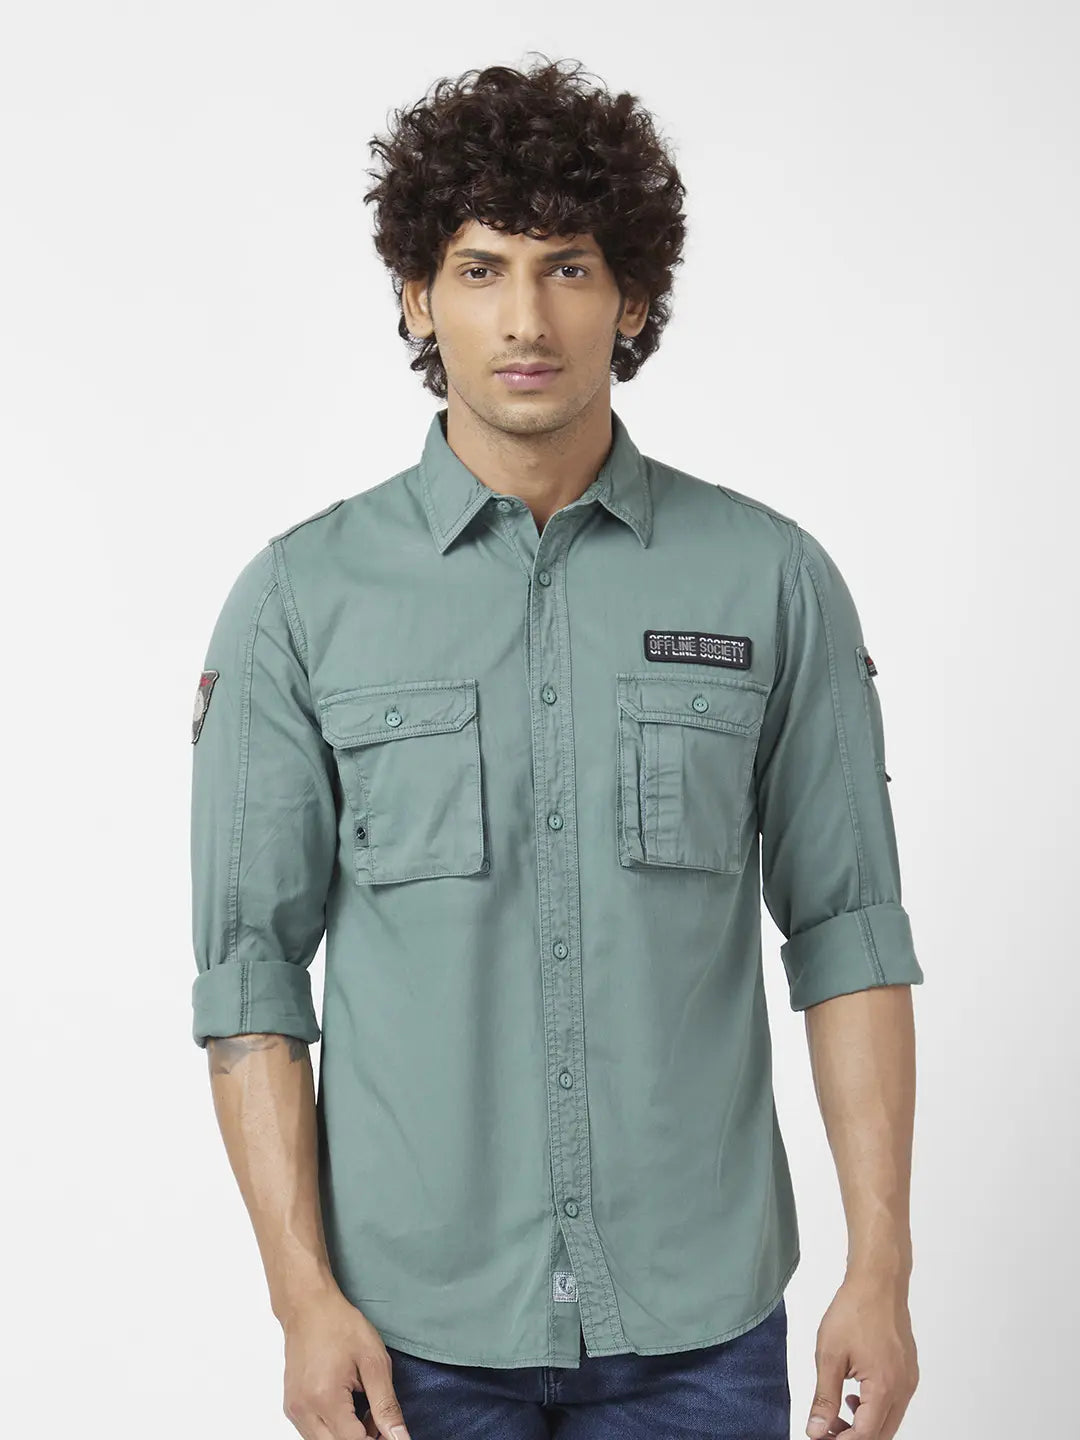 Buy U.S. Polo Assn. Denim Co. Solid Cotton Casual Shirt - NNNOW.com